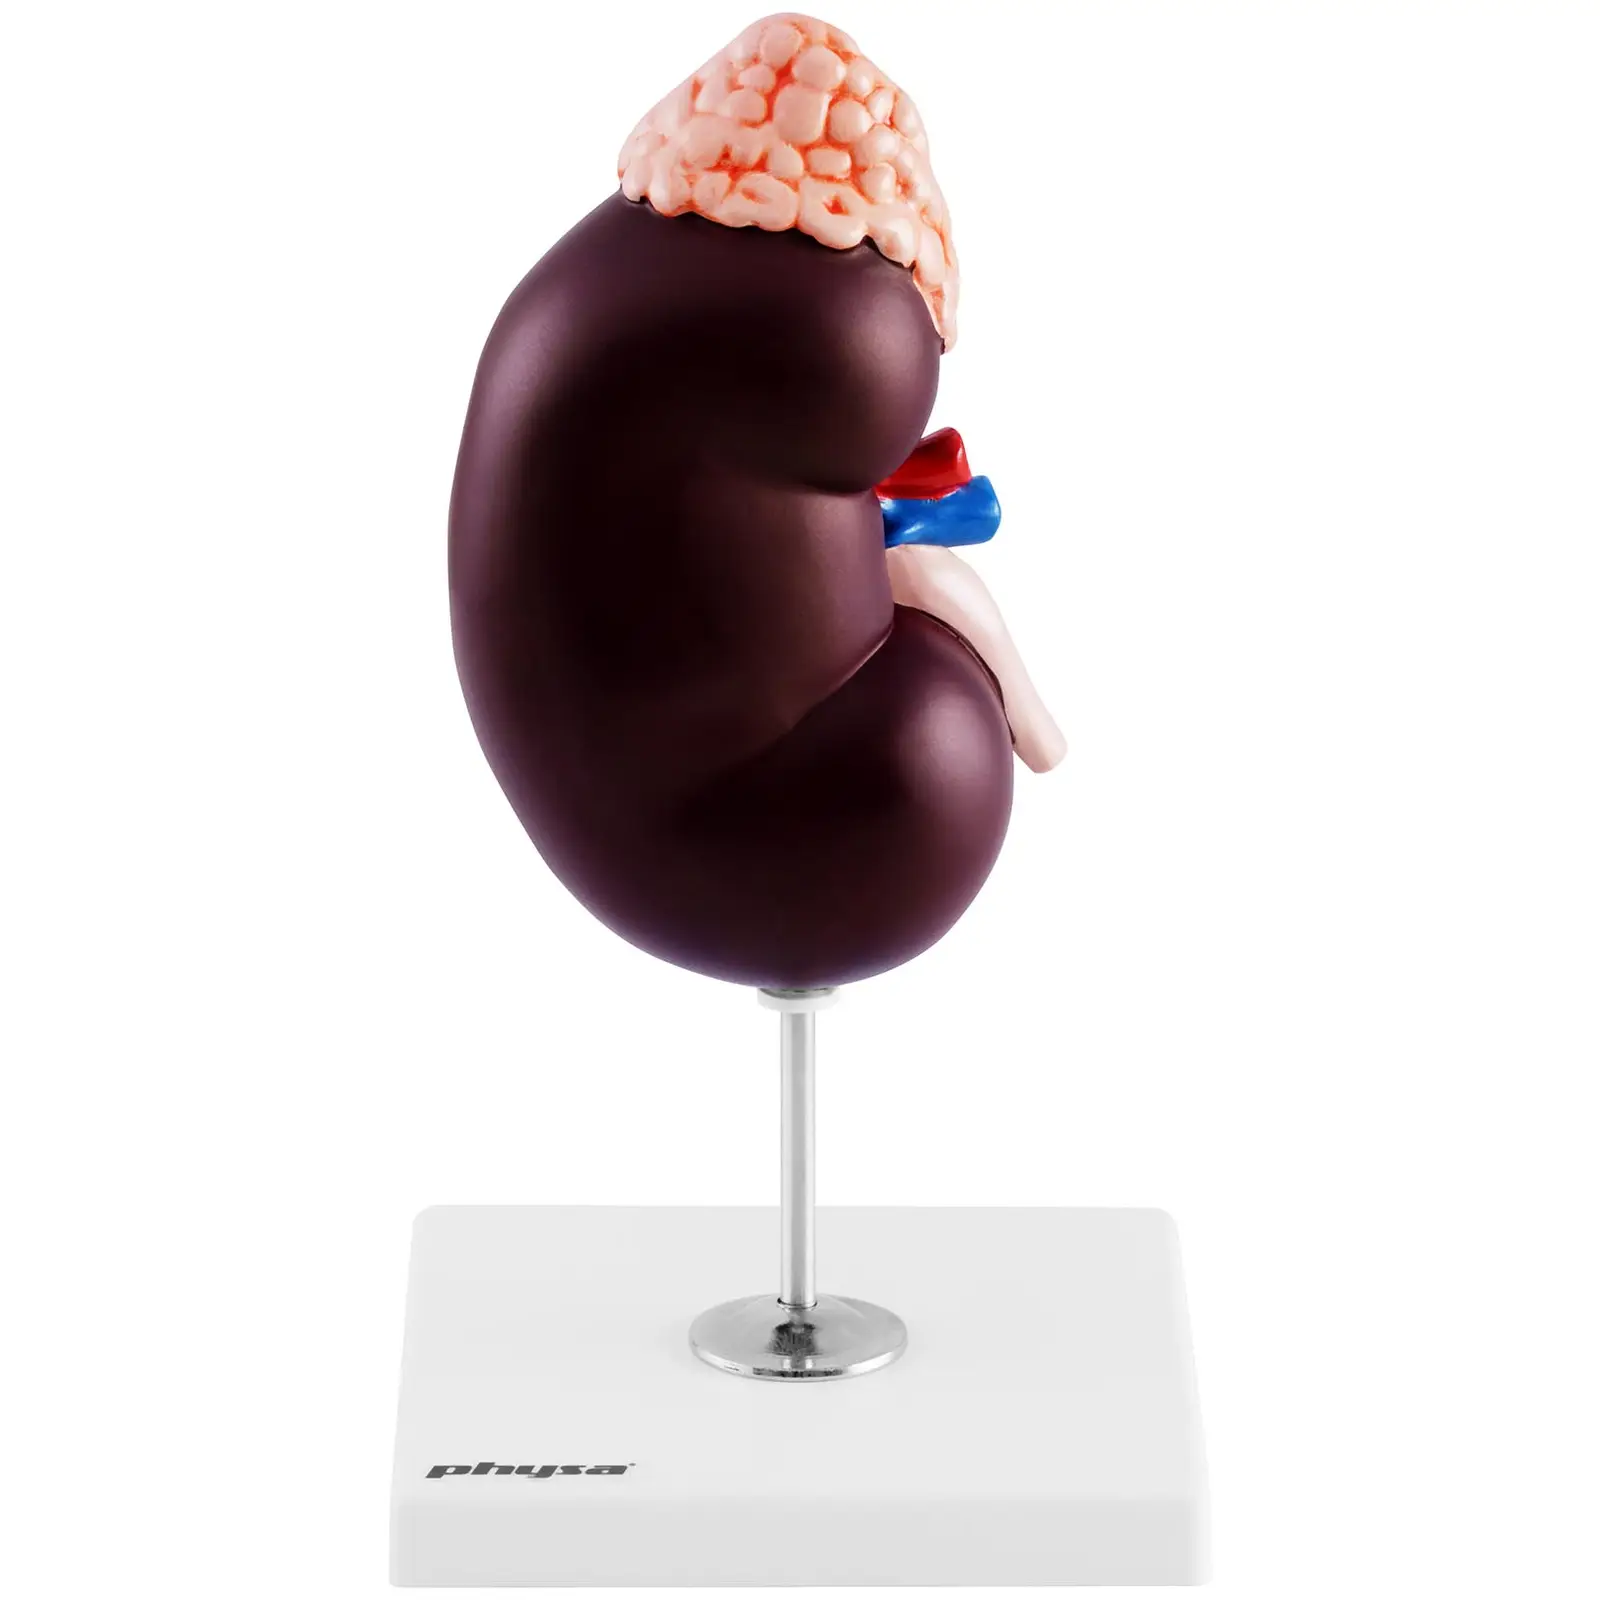 Kidney model - 1.5x magnification